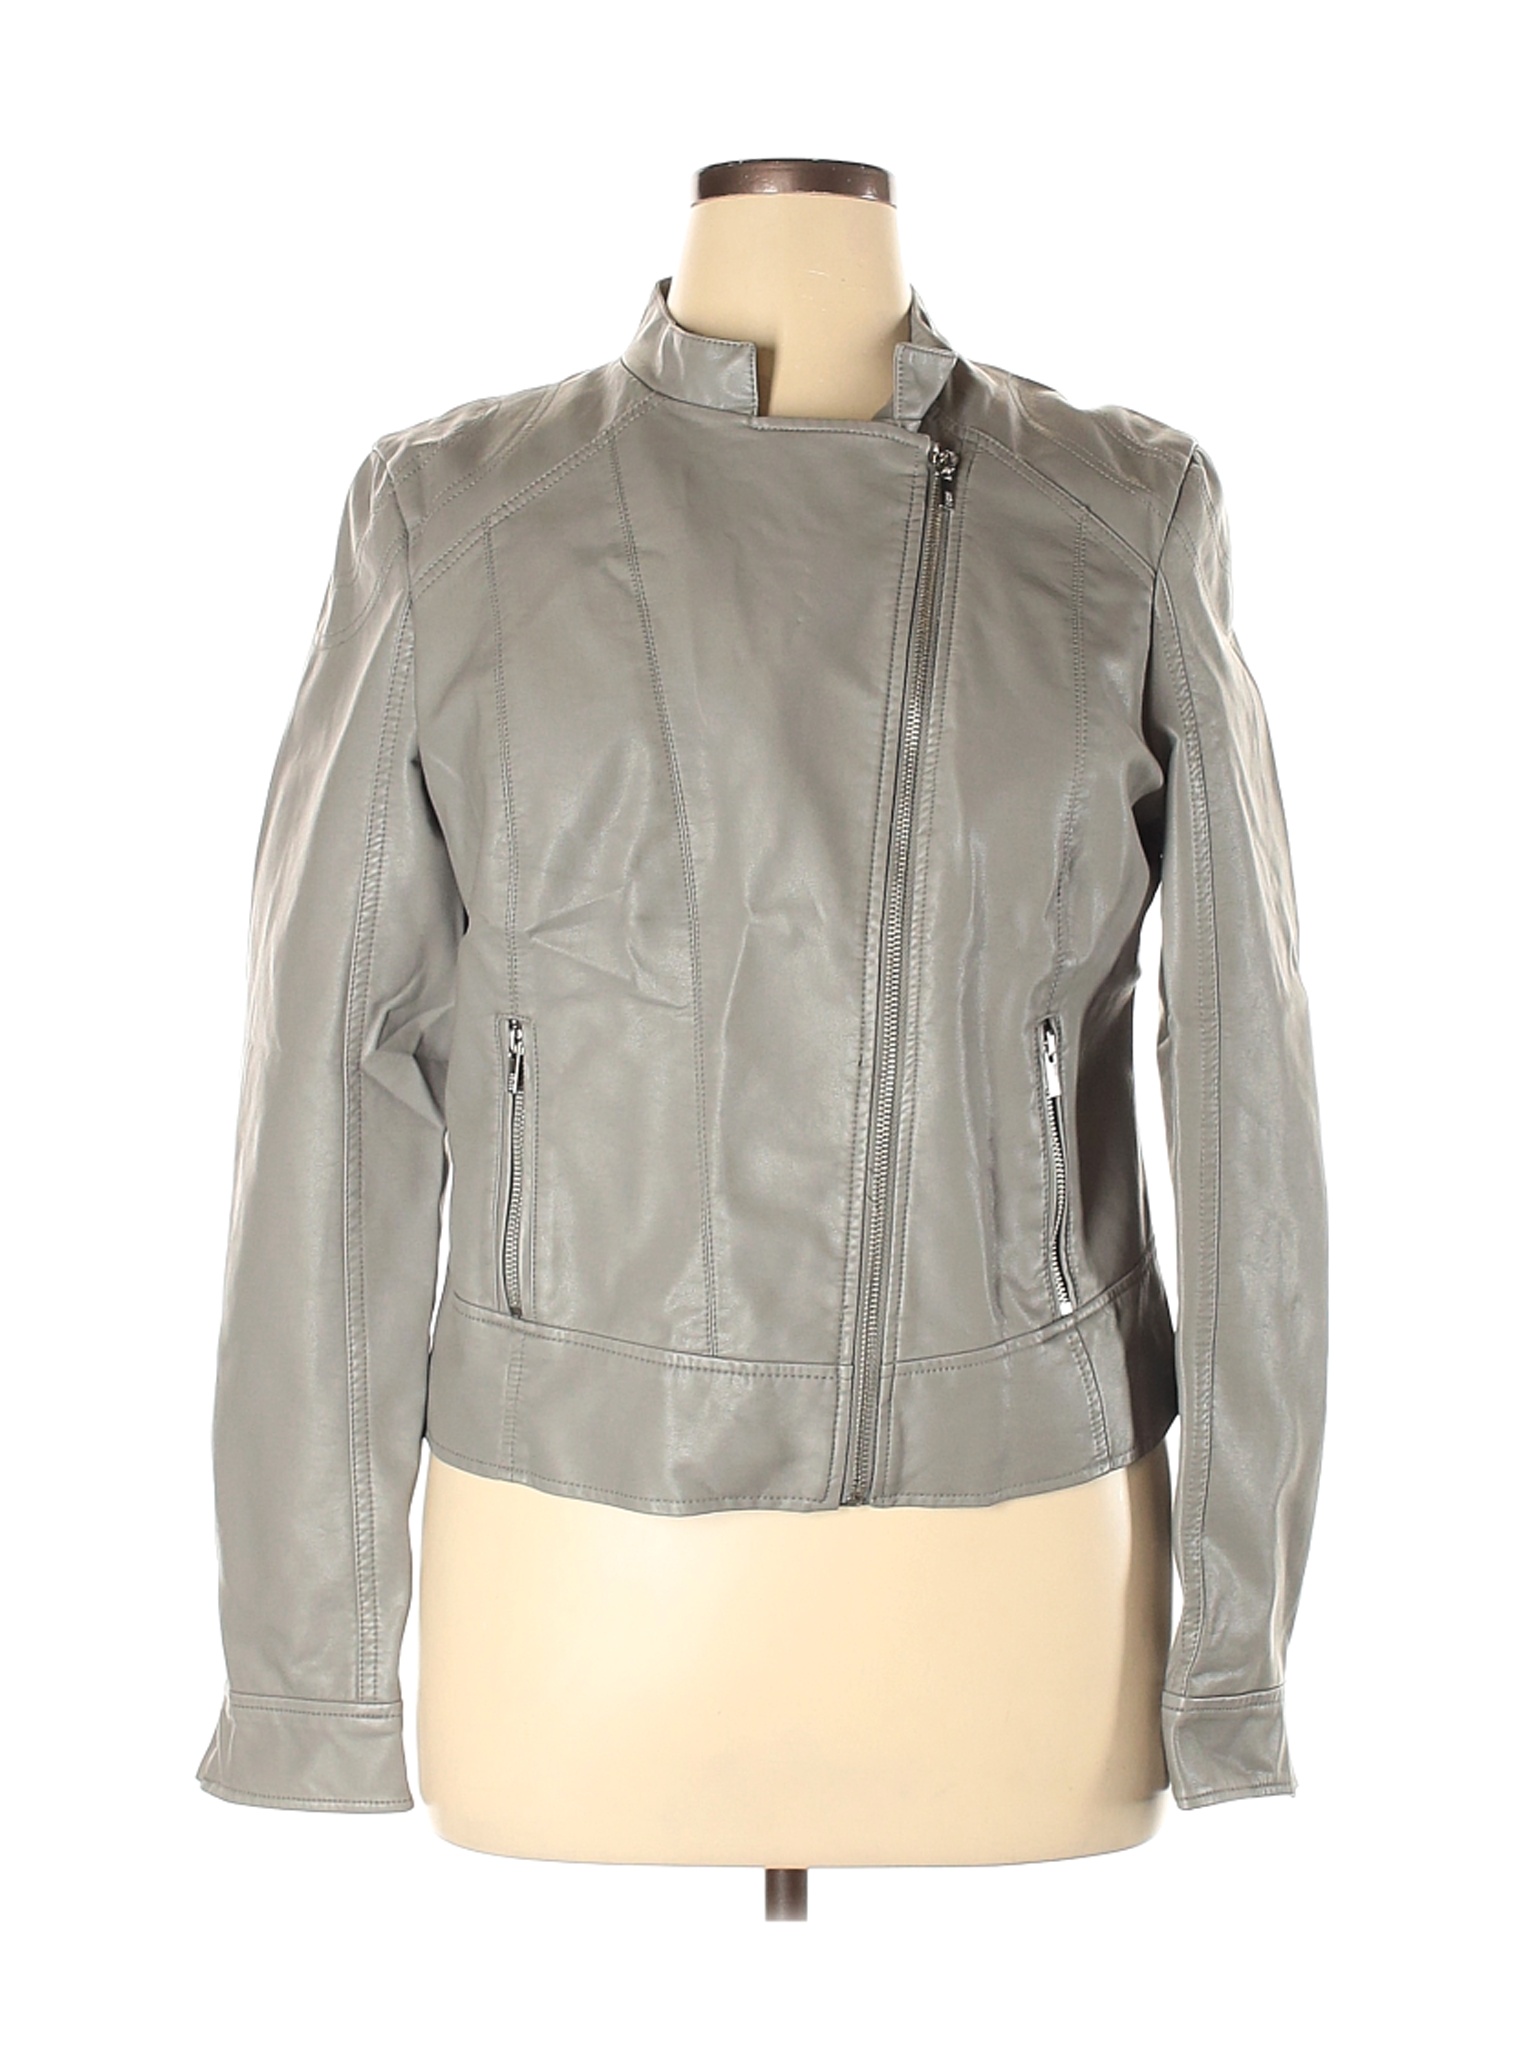 Black Rivet Women Gray Faux Leather Jacket XL | eBay